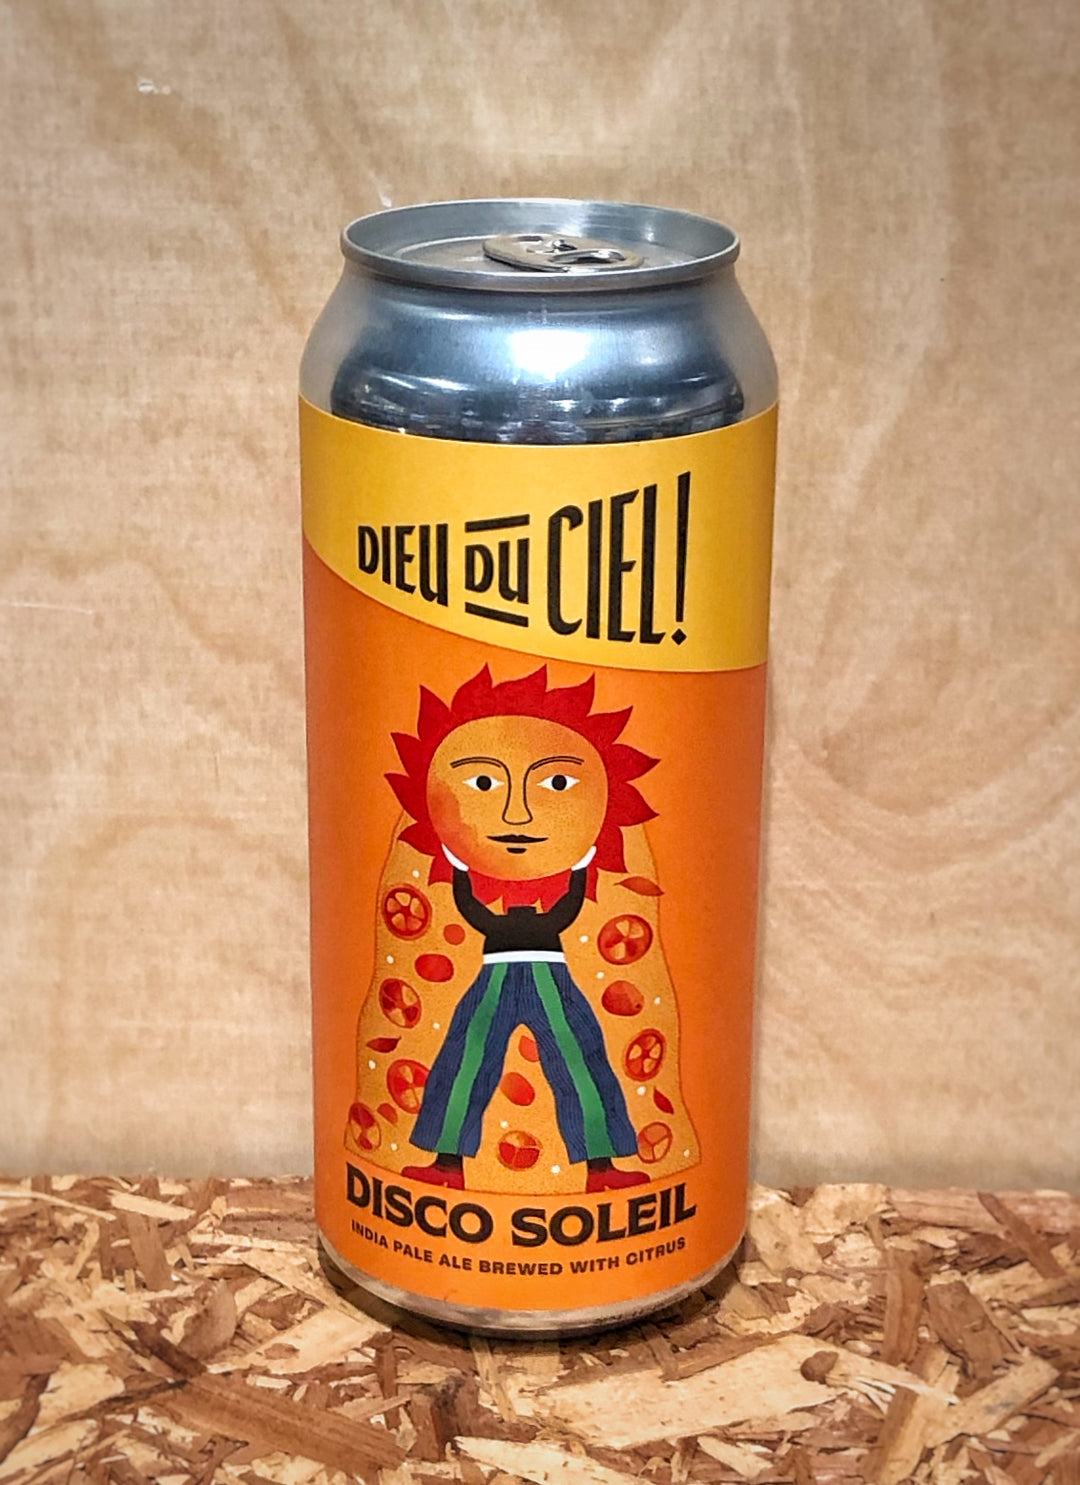 Brasserie Dieu du Ciel! 'Disco Soleil' India Pale Ale brewed with Citrus (Montreal, QC, Canada)